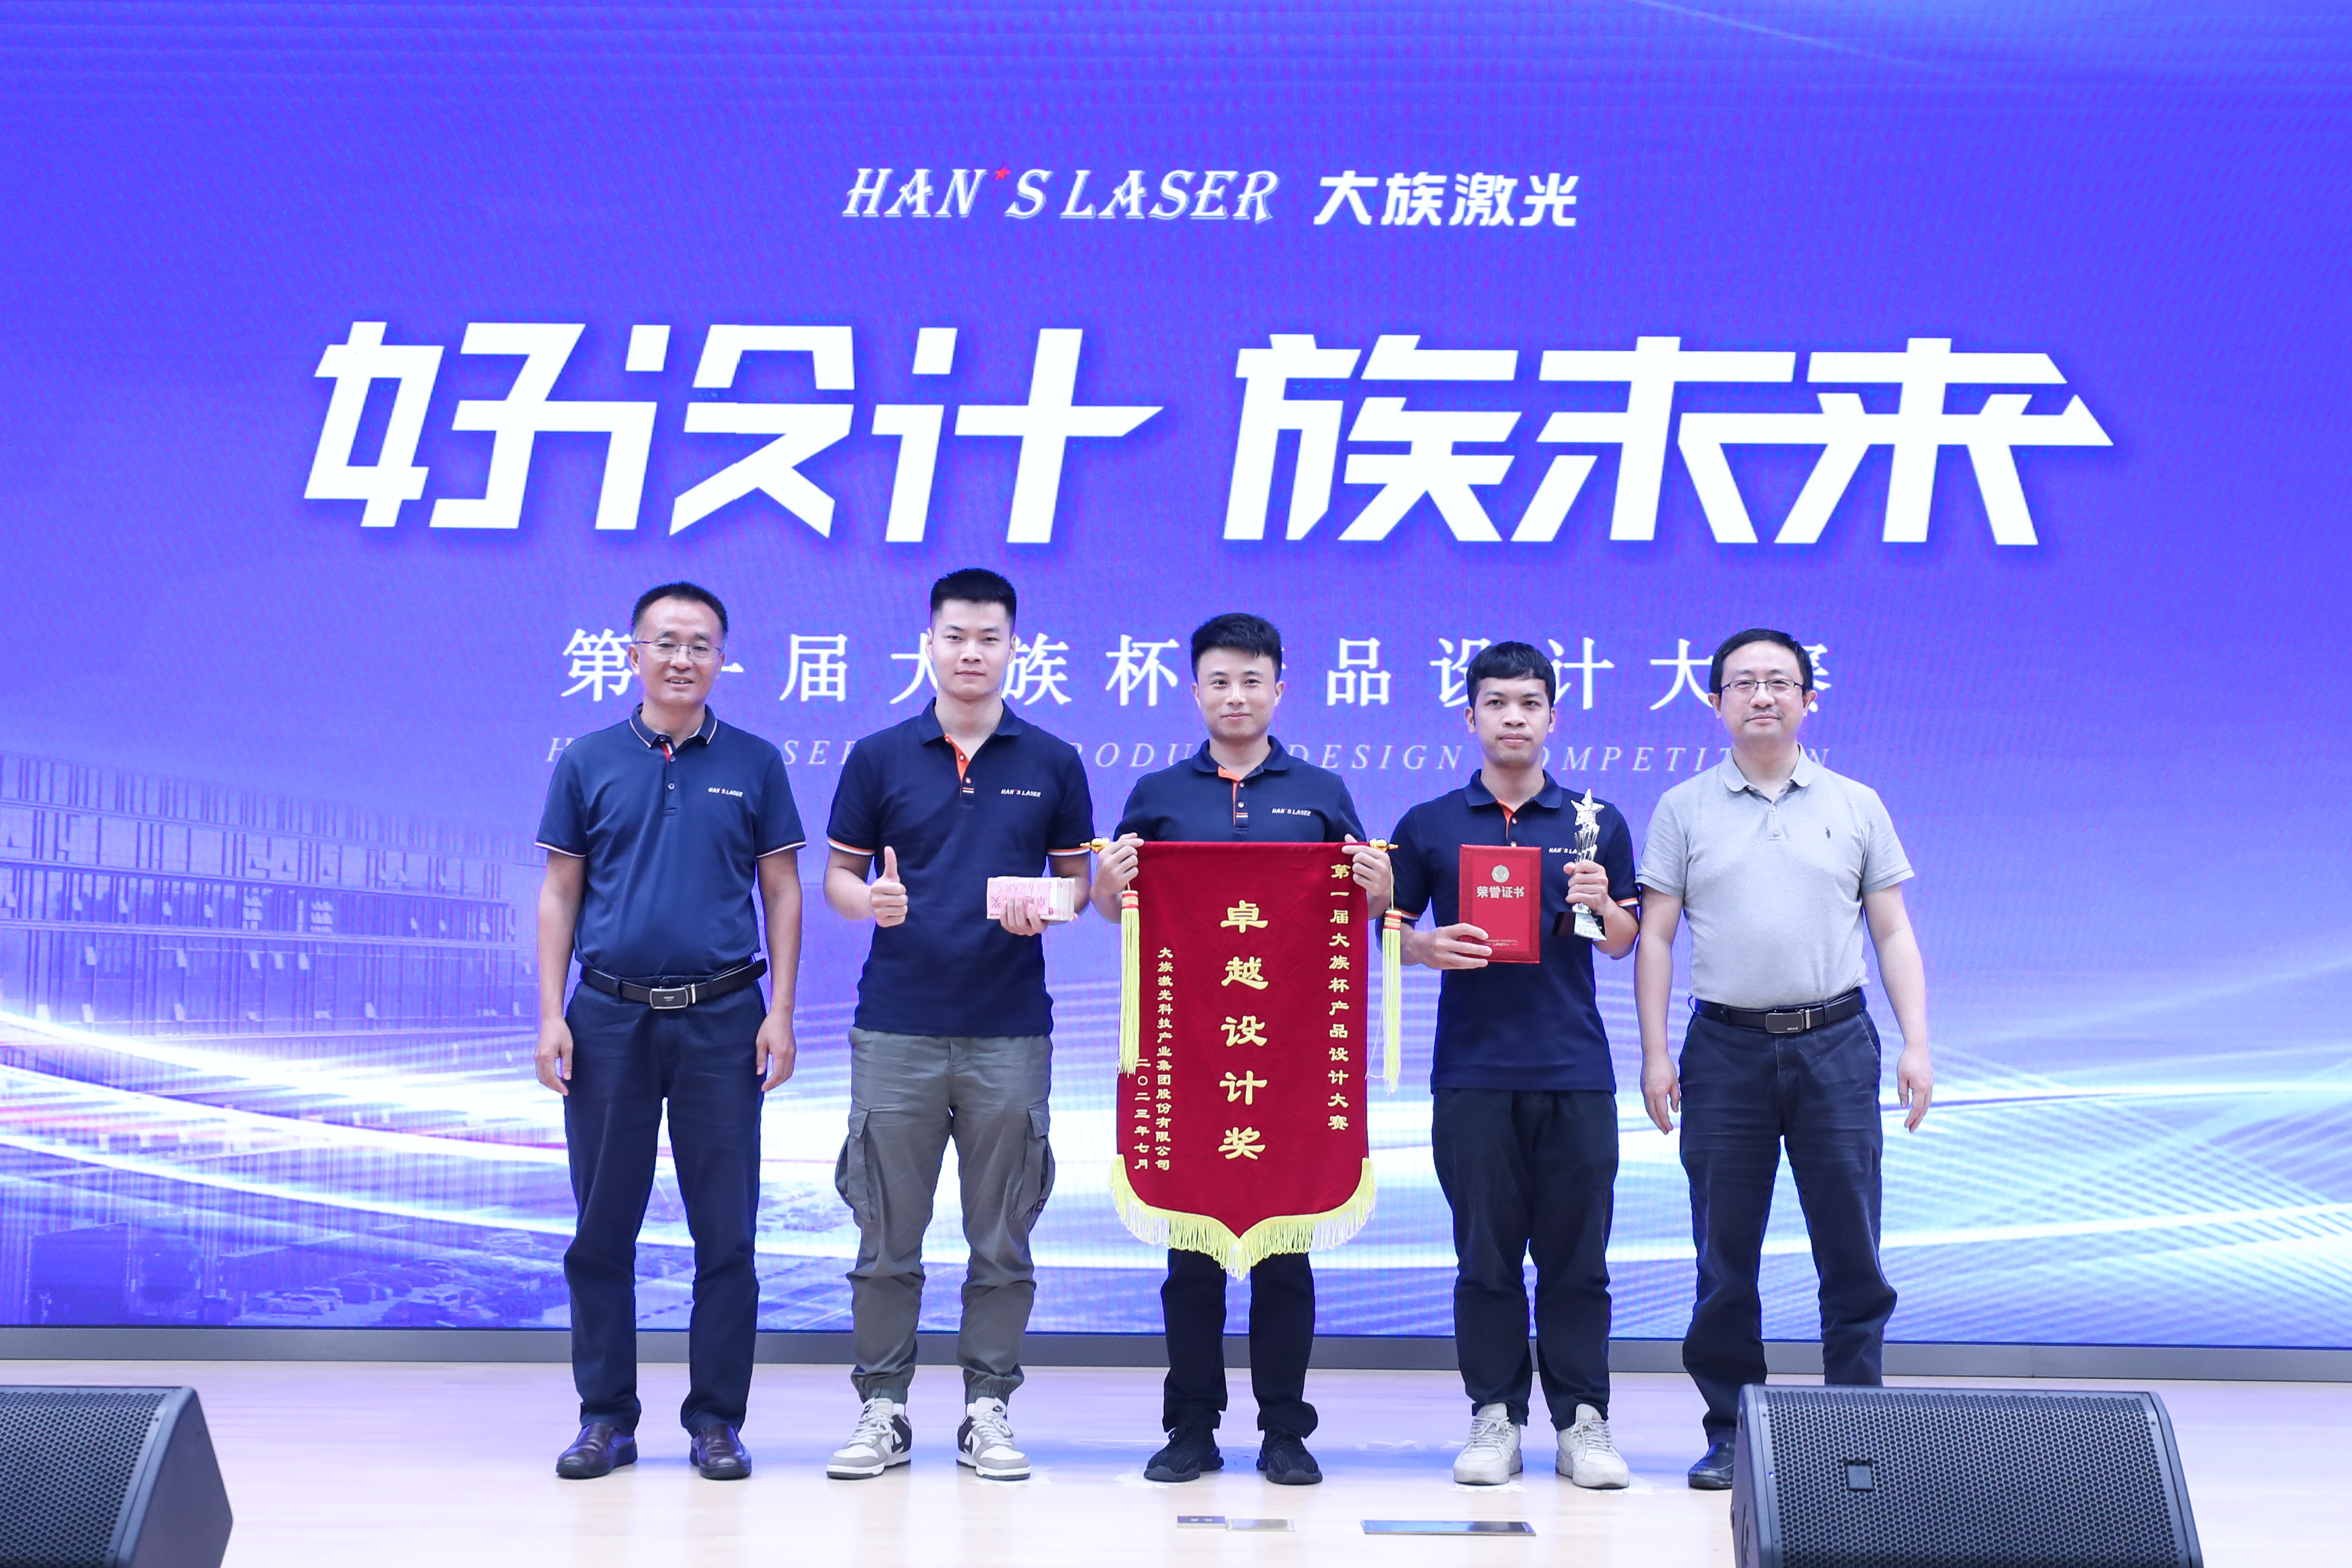 Han’s Laser Smart Equipment Group won 